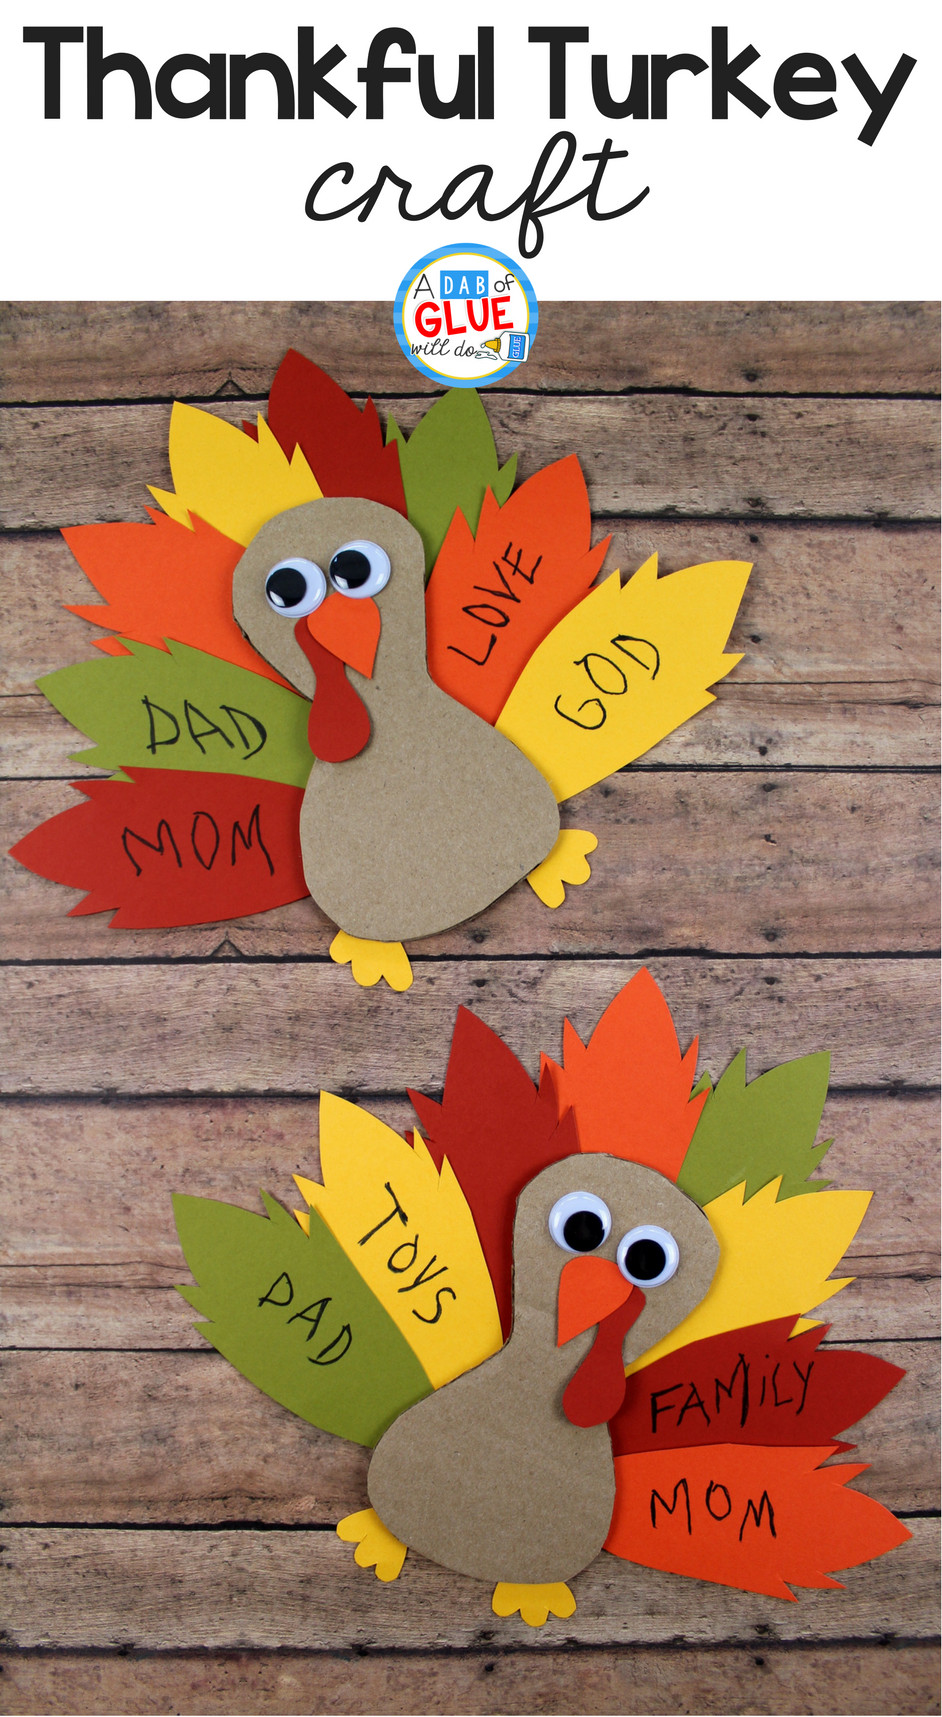 Thanksgiving Turkey Craft
 Cardboard Thankful Turkey Craft